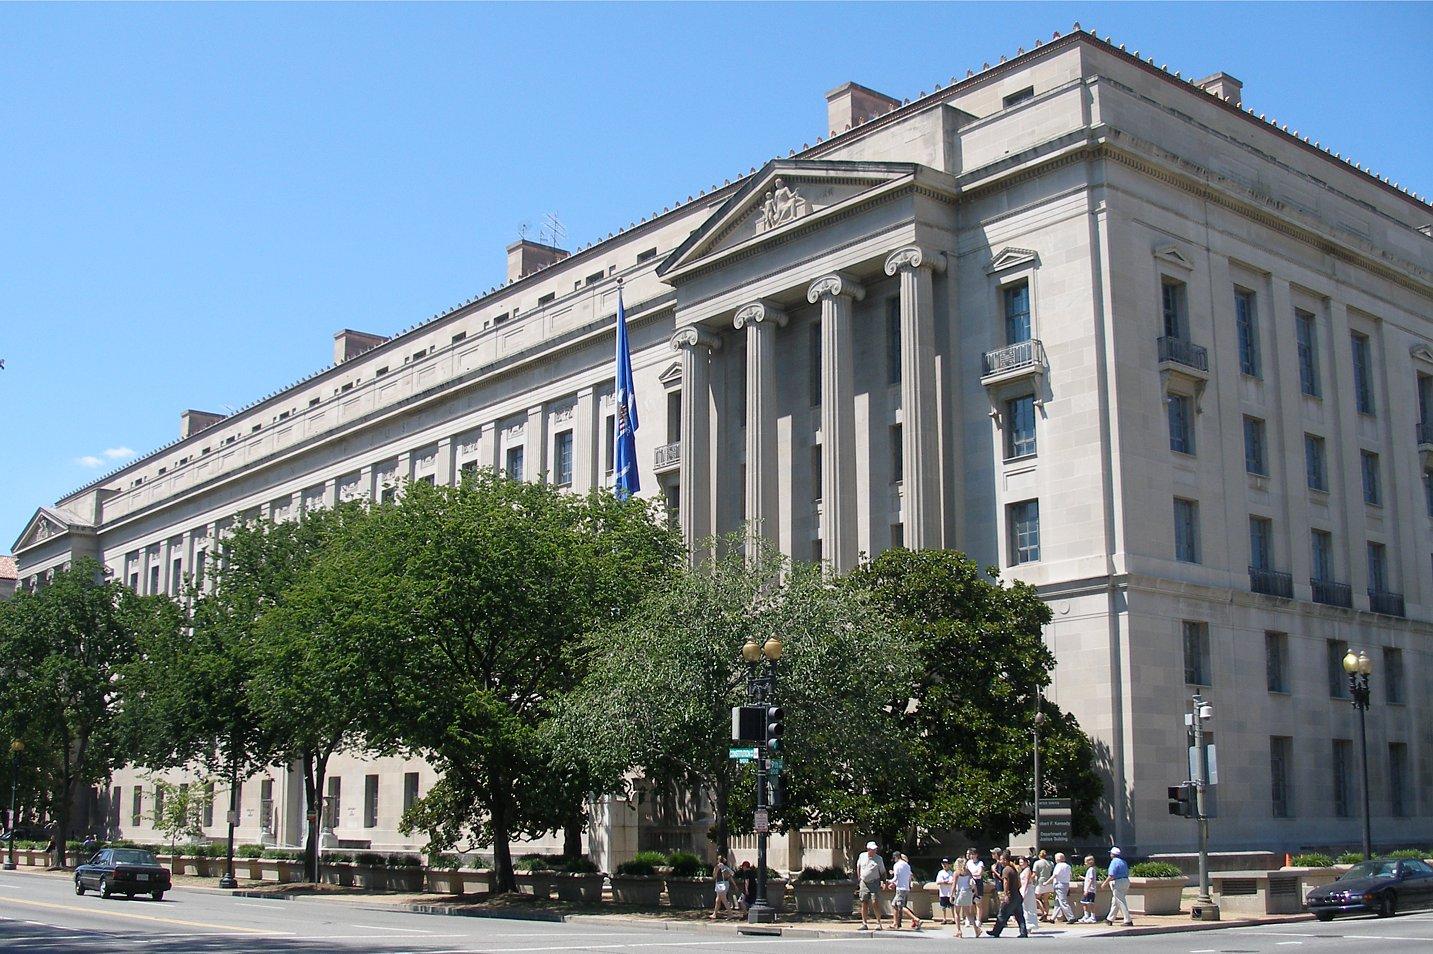 The US Justice Department headquarters